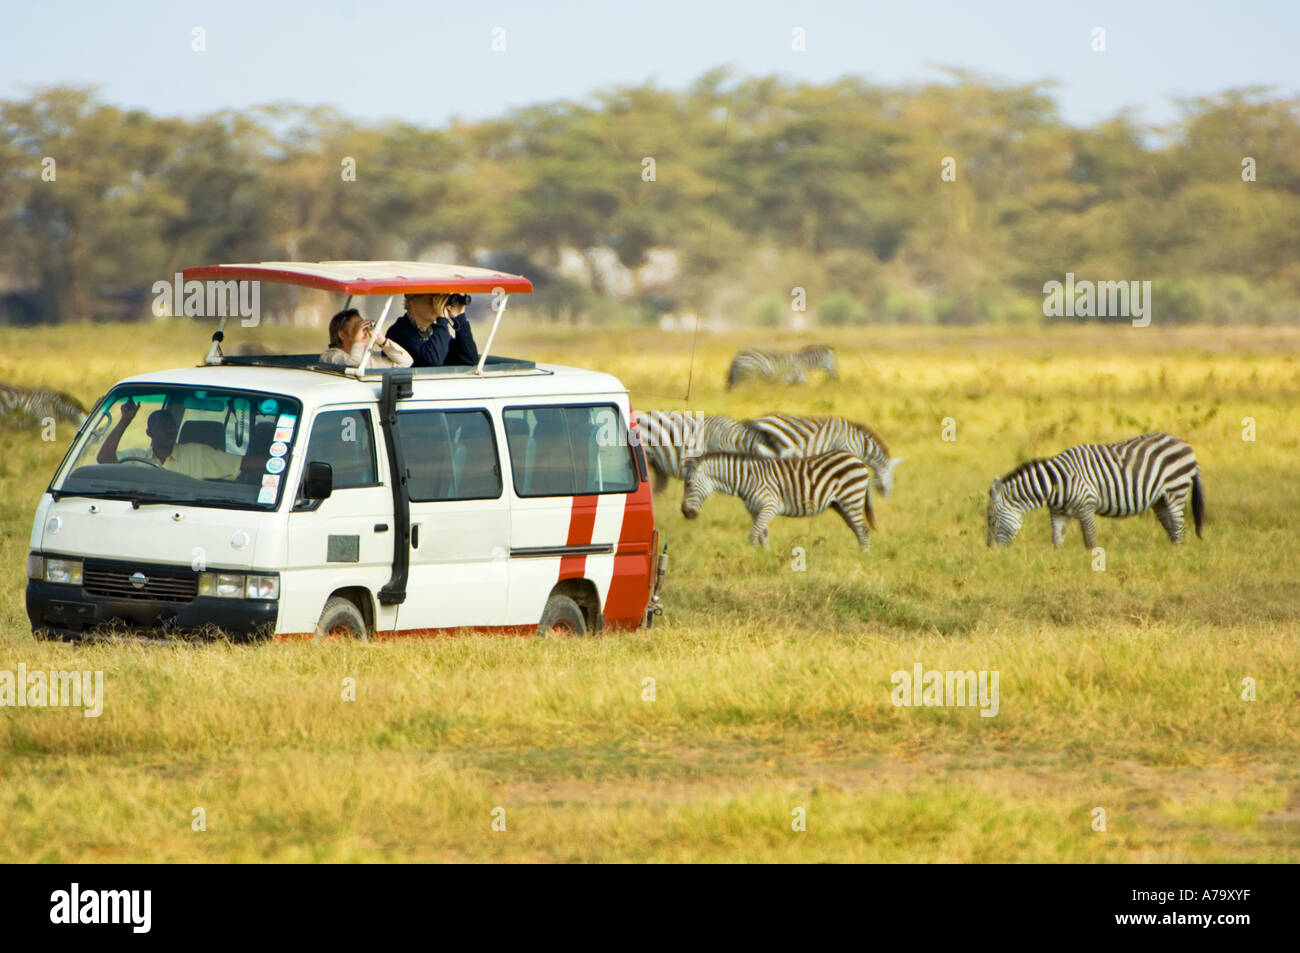 jeep SAFARI Kenya KENIA East Africa AMBOSELI nationalpark national park tourists watching wild zebra herd family group animals Stock Photo